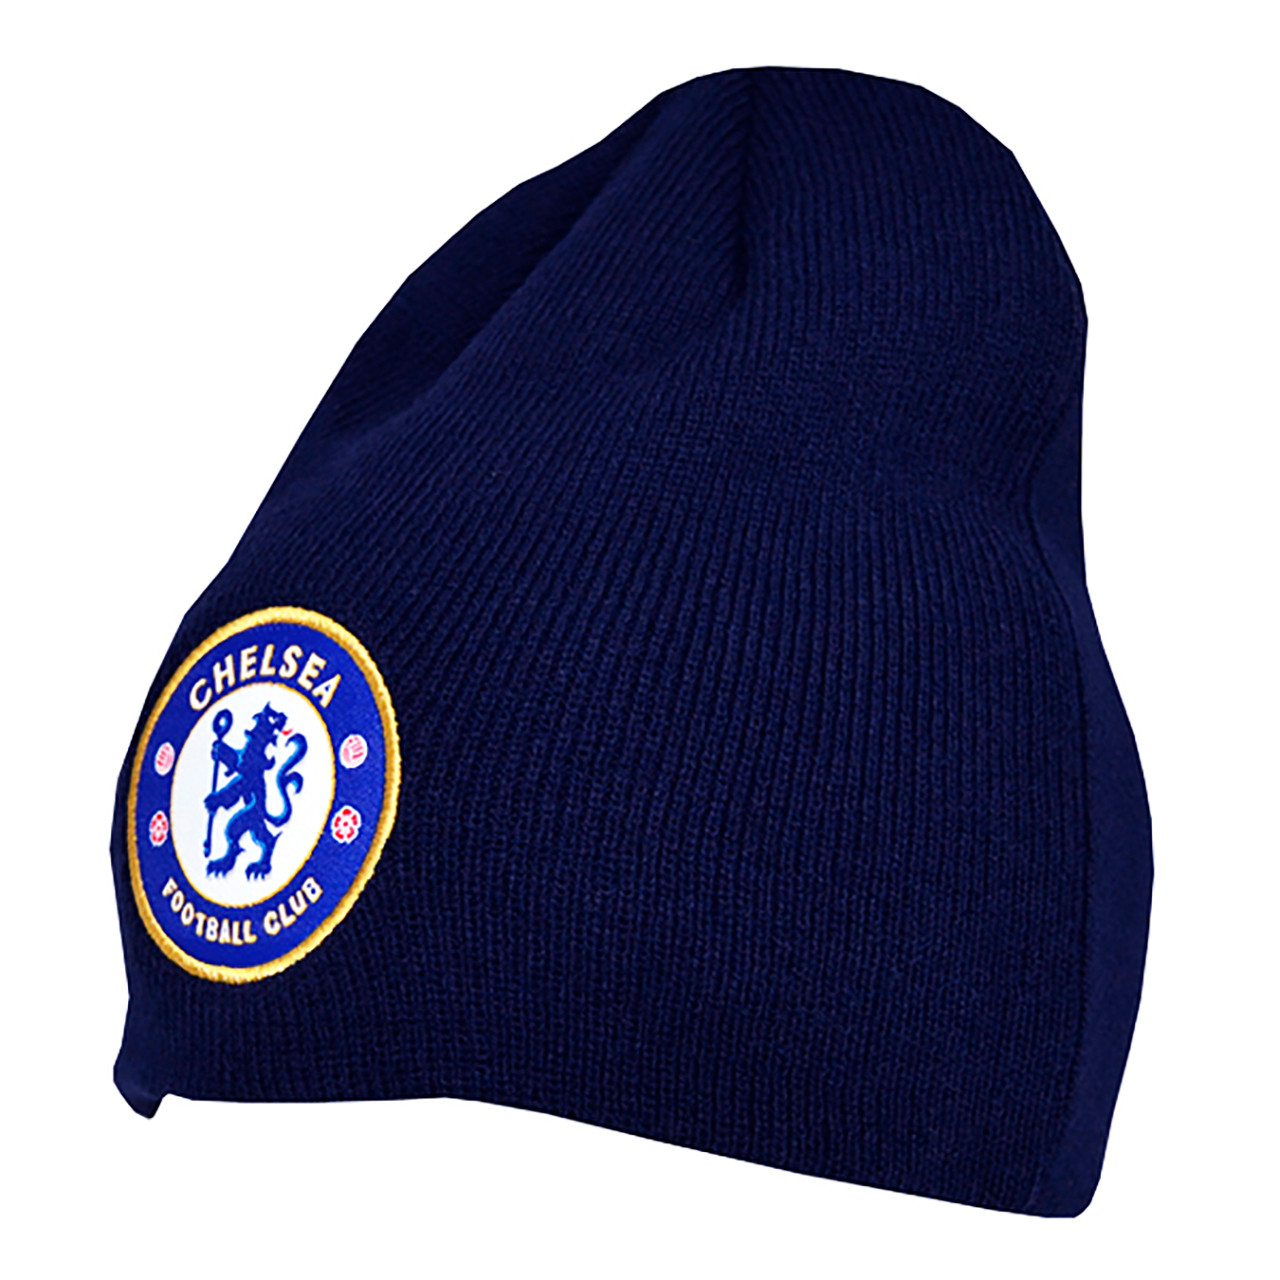 Chelsea FC Navy, Hat